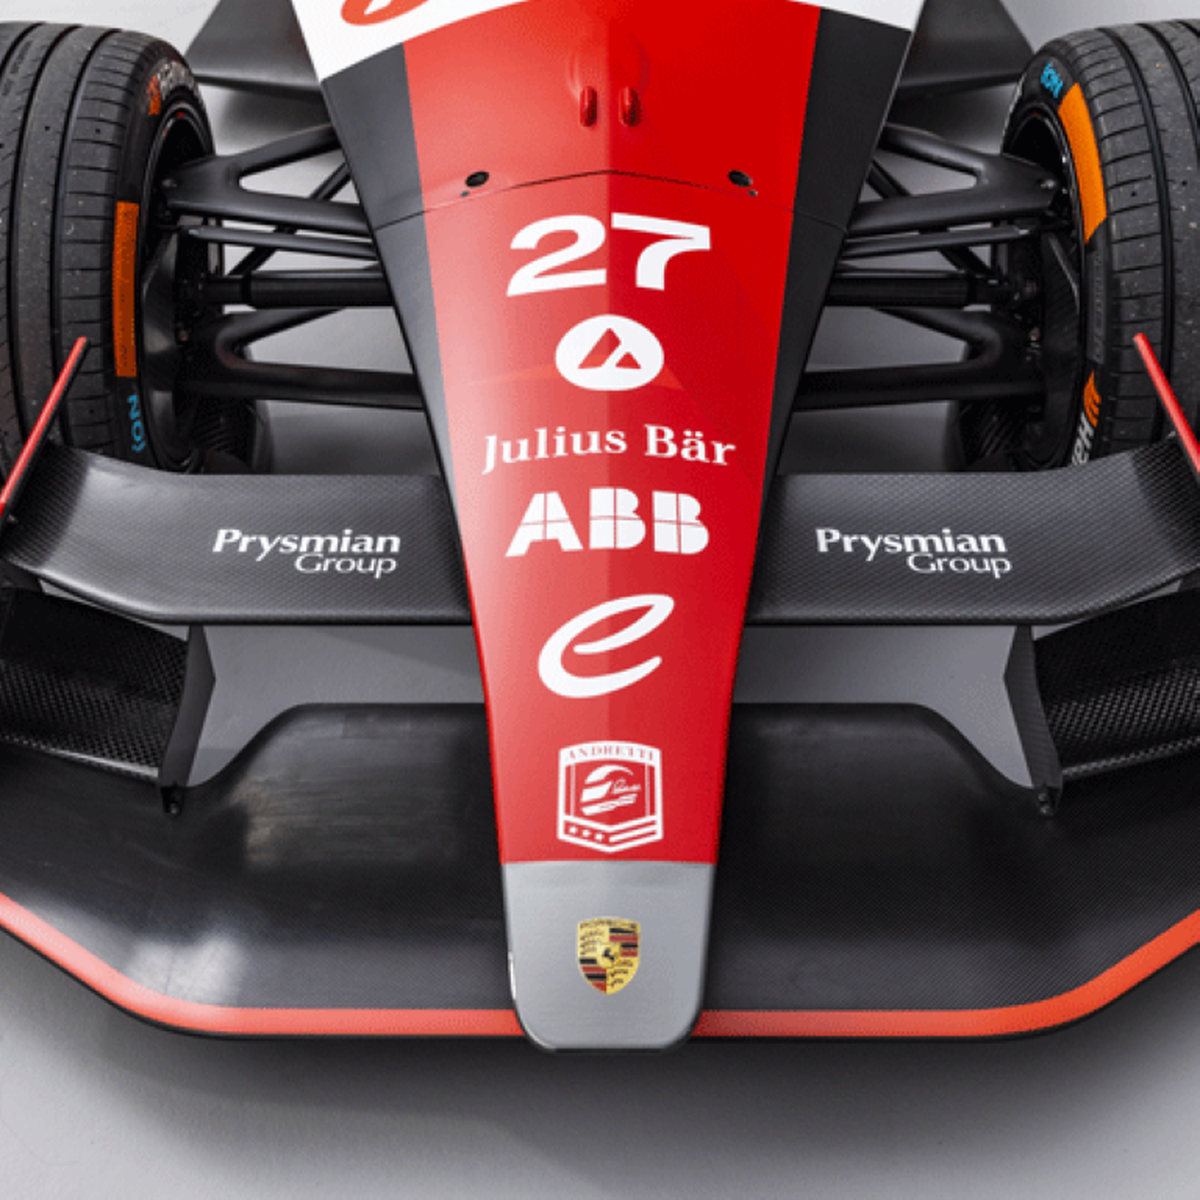 Prysmian Group y Avalanche Andretti Formula E unen fuerzas